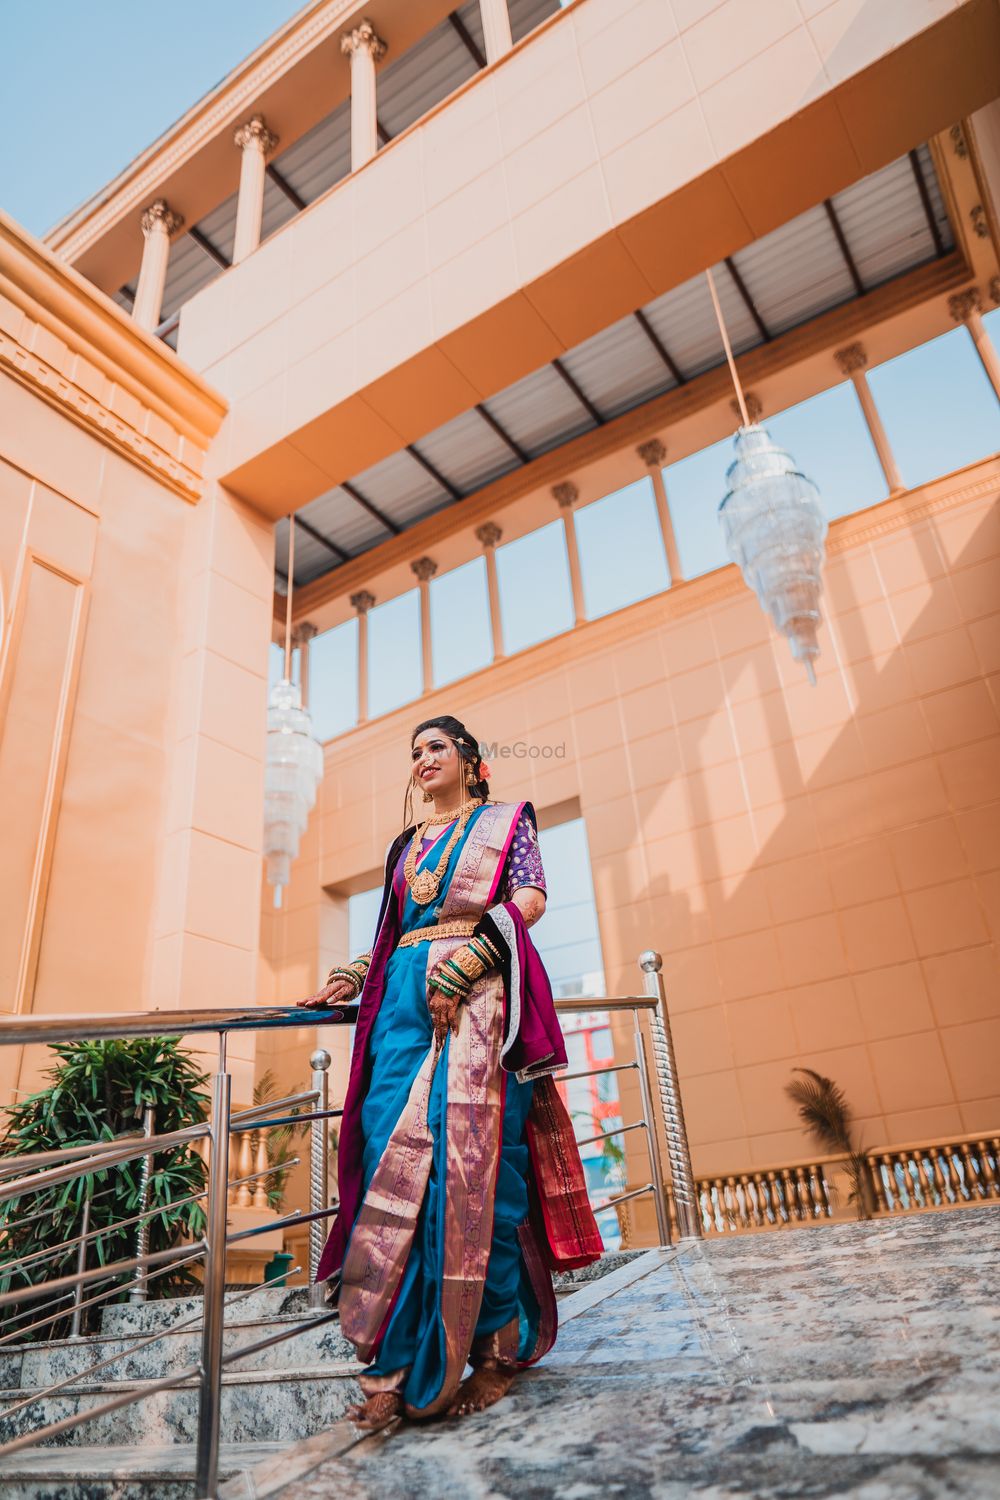 Photo From Anuja weds Gaurav - By Maharaja Studio